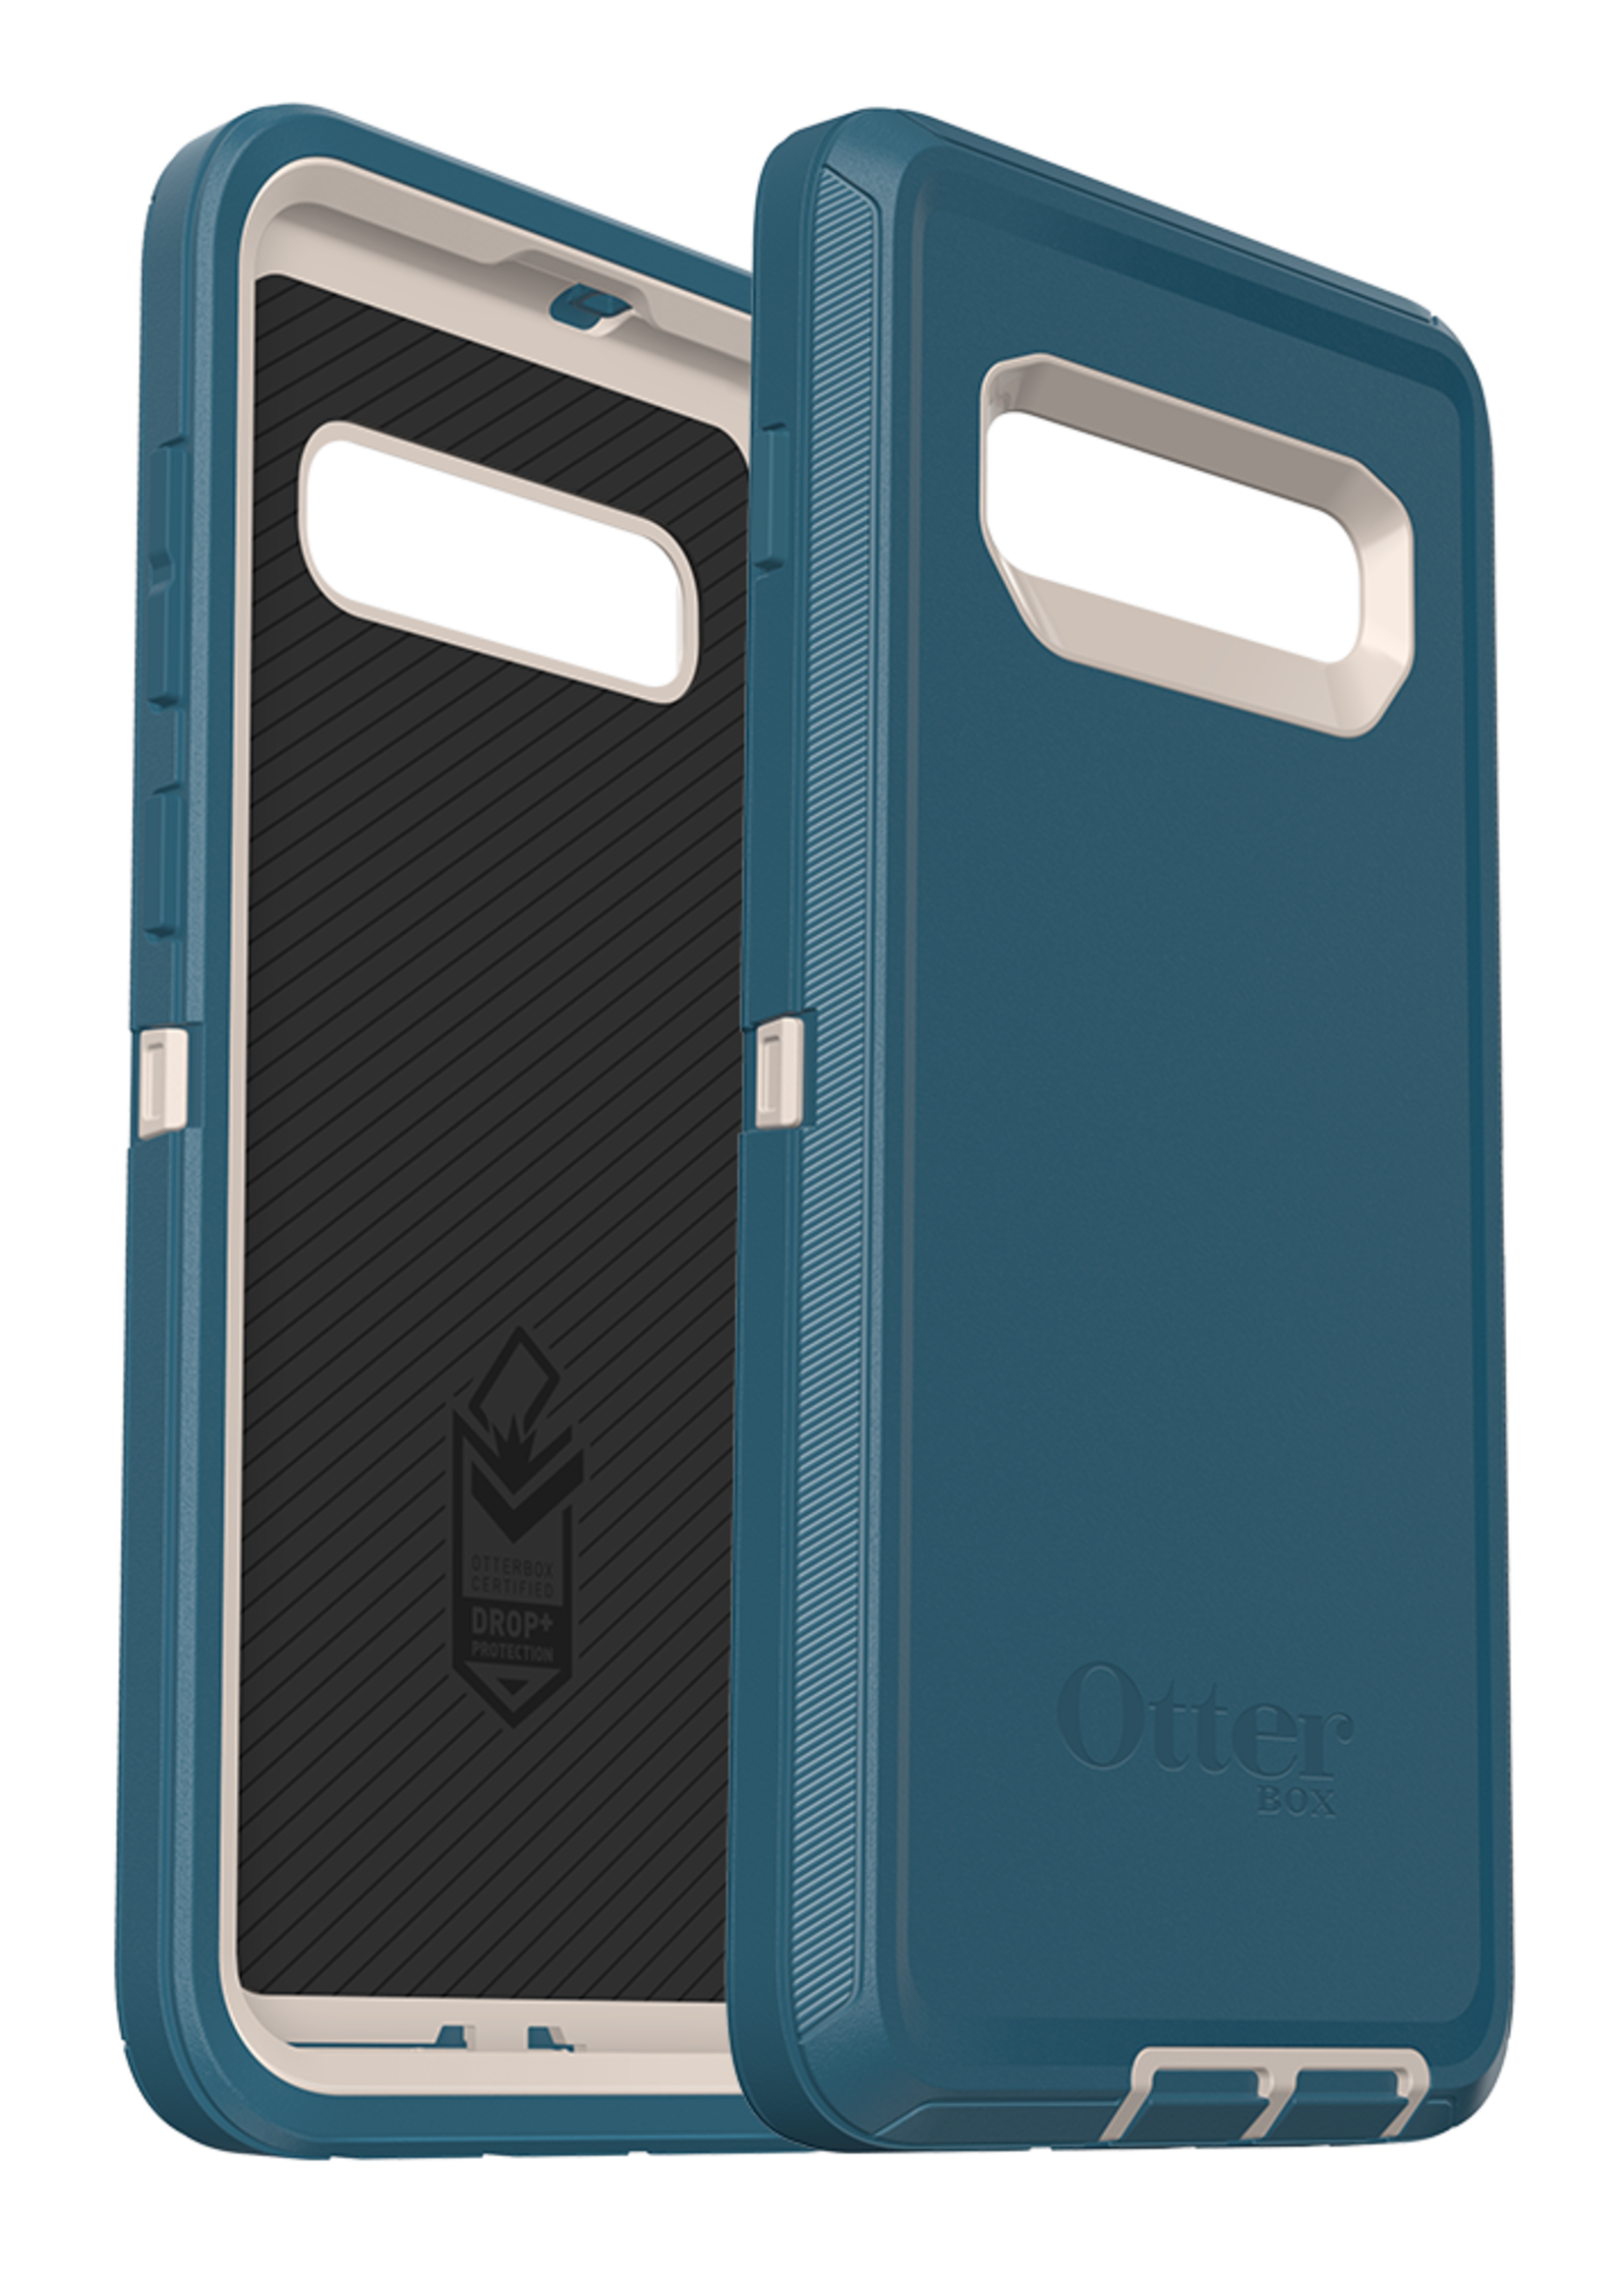 Otterbox OtterBox - Defender Case for Samsung Galaxy S10 Plus - Big Sur